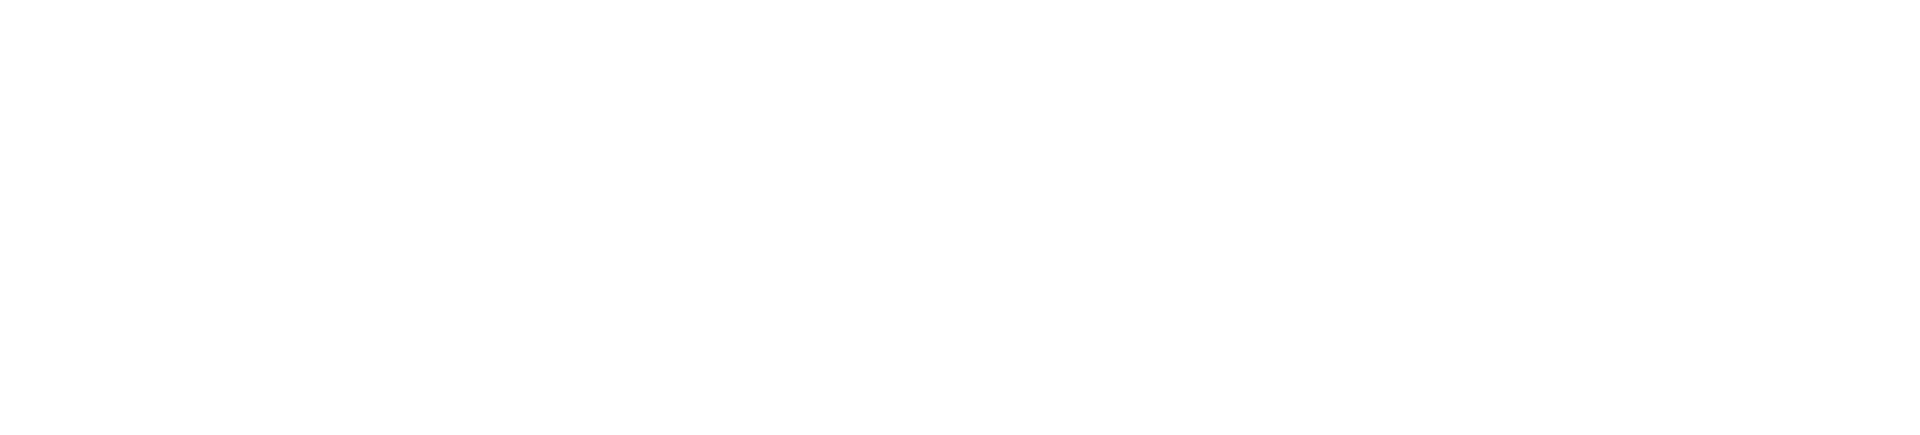 Relief Pain & Wellness Main Logo